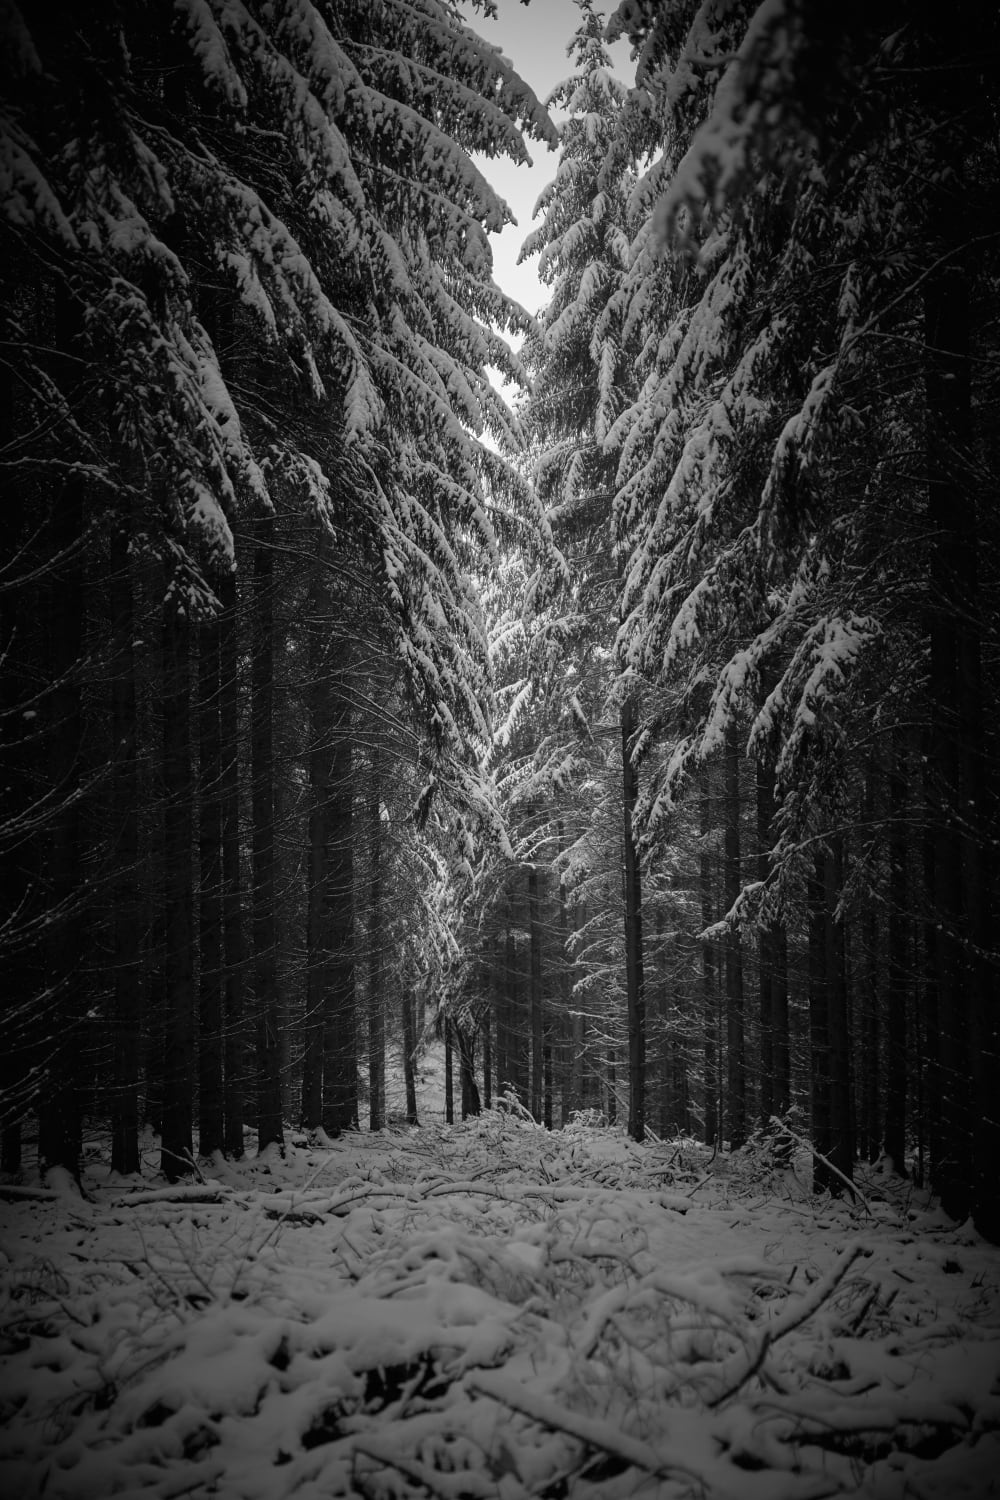 B&W impression of a walk in a snowy forest in Saxony, Germany